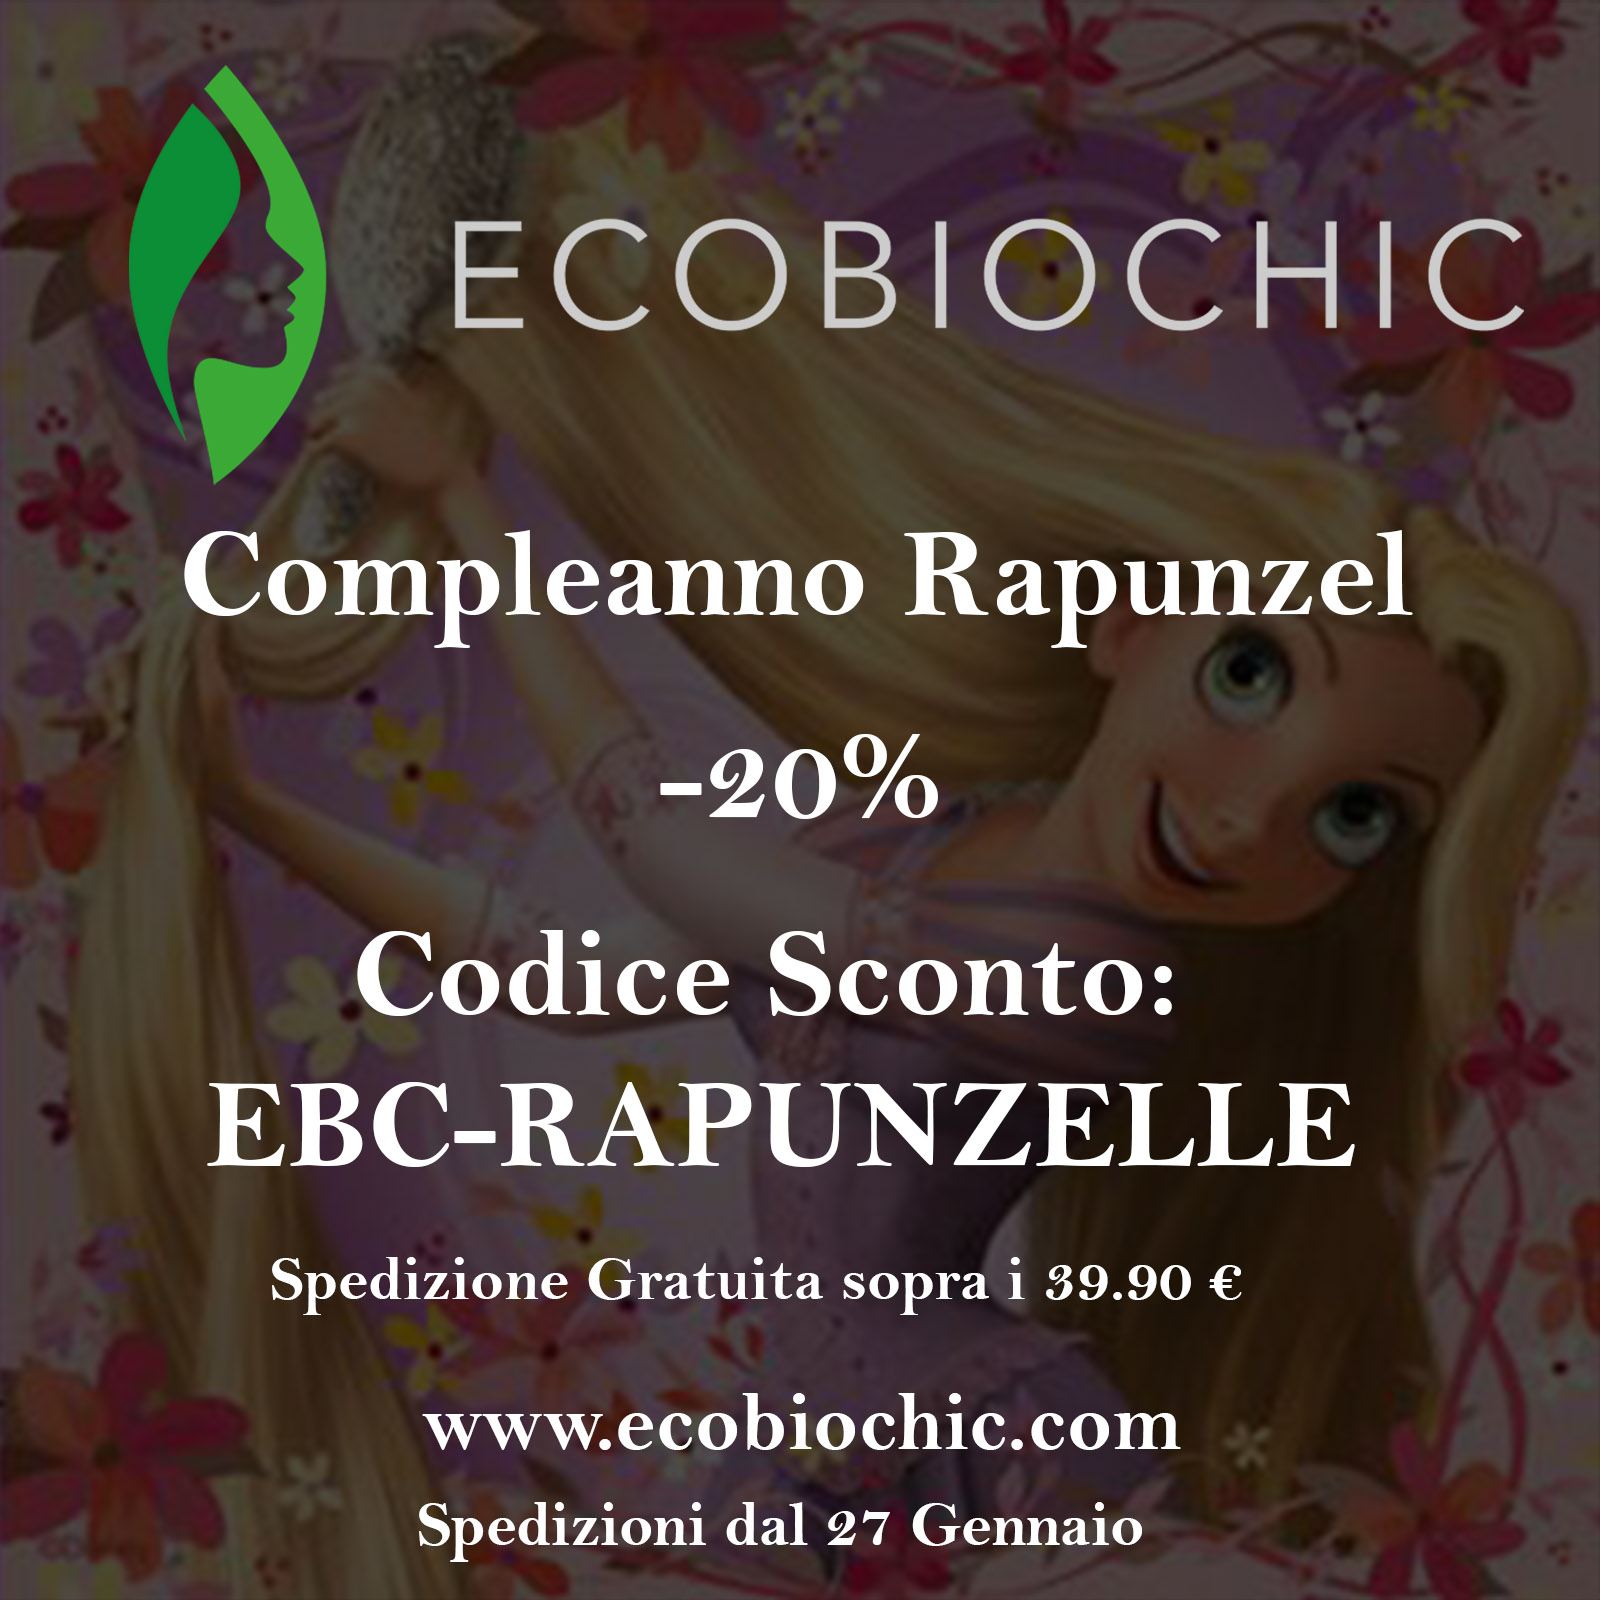 EcobioChic Compleanno Rapunzel - OFFICIAL PROGETTO RAPUNZEL ITALIA